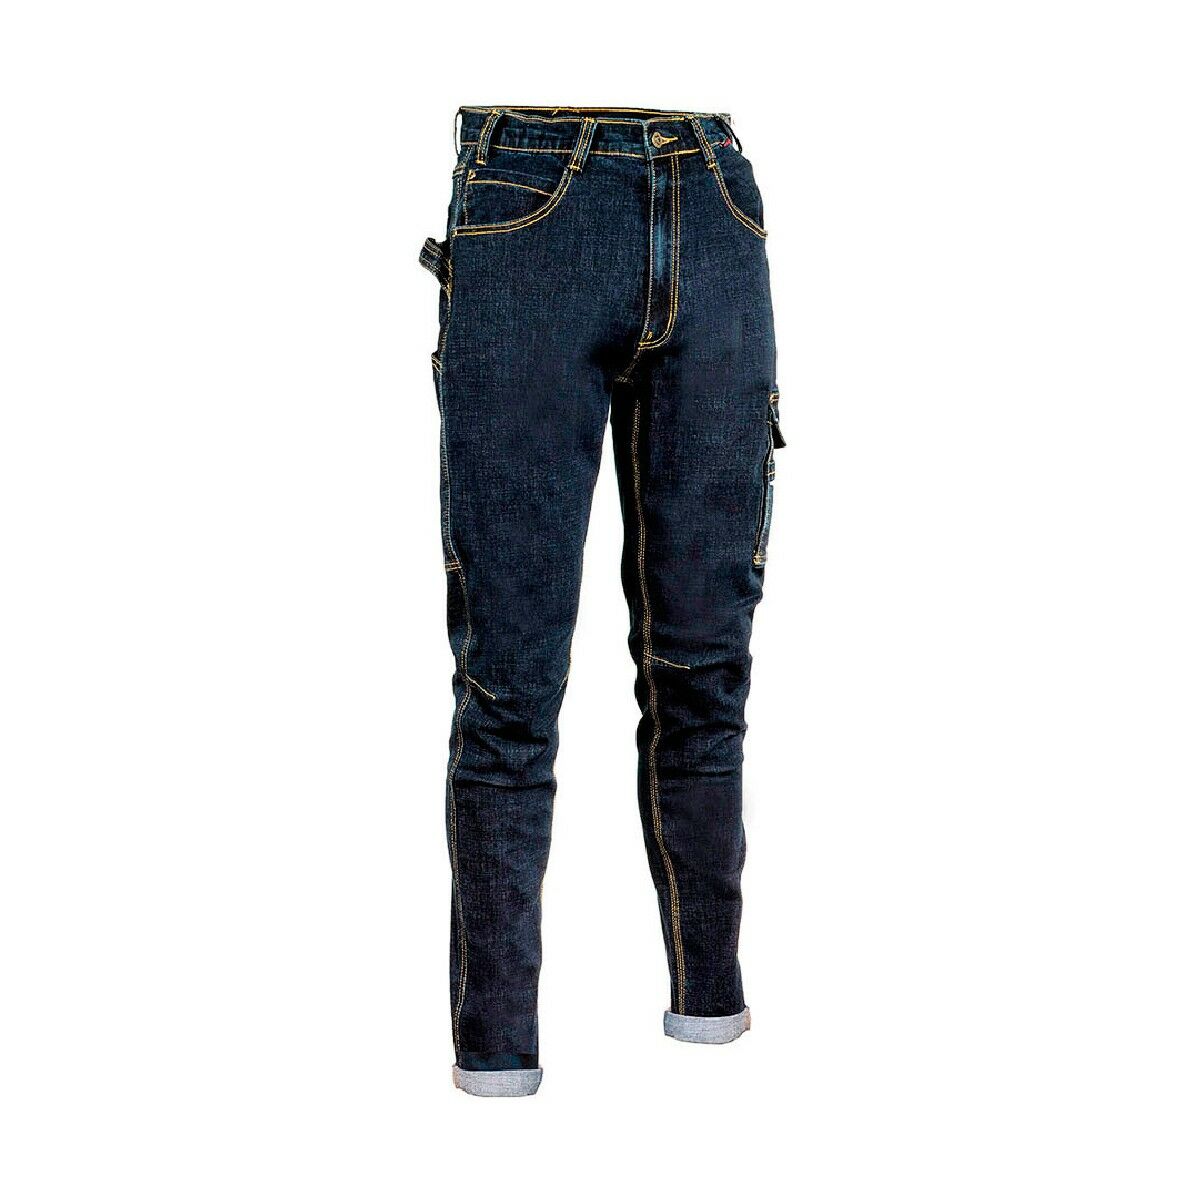 Pantaloni de siguranță Cofra Cabries Profesionist Bleumarin - Mărime 50